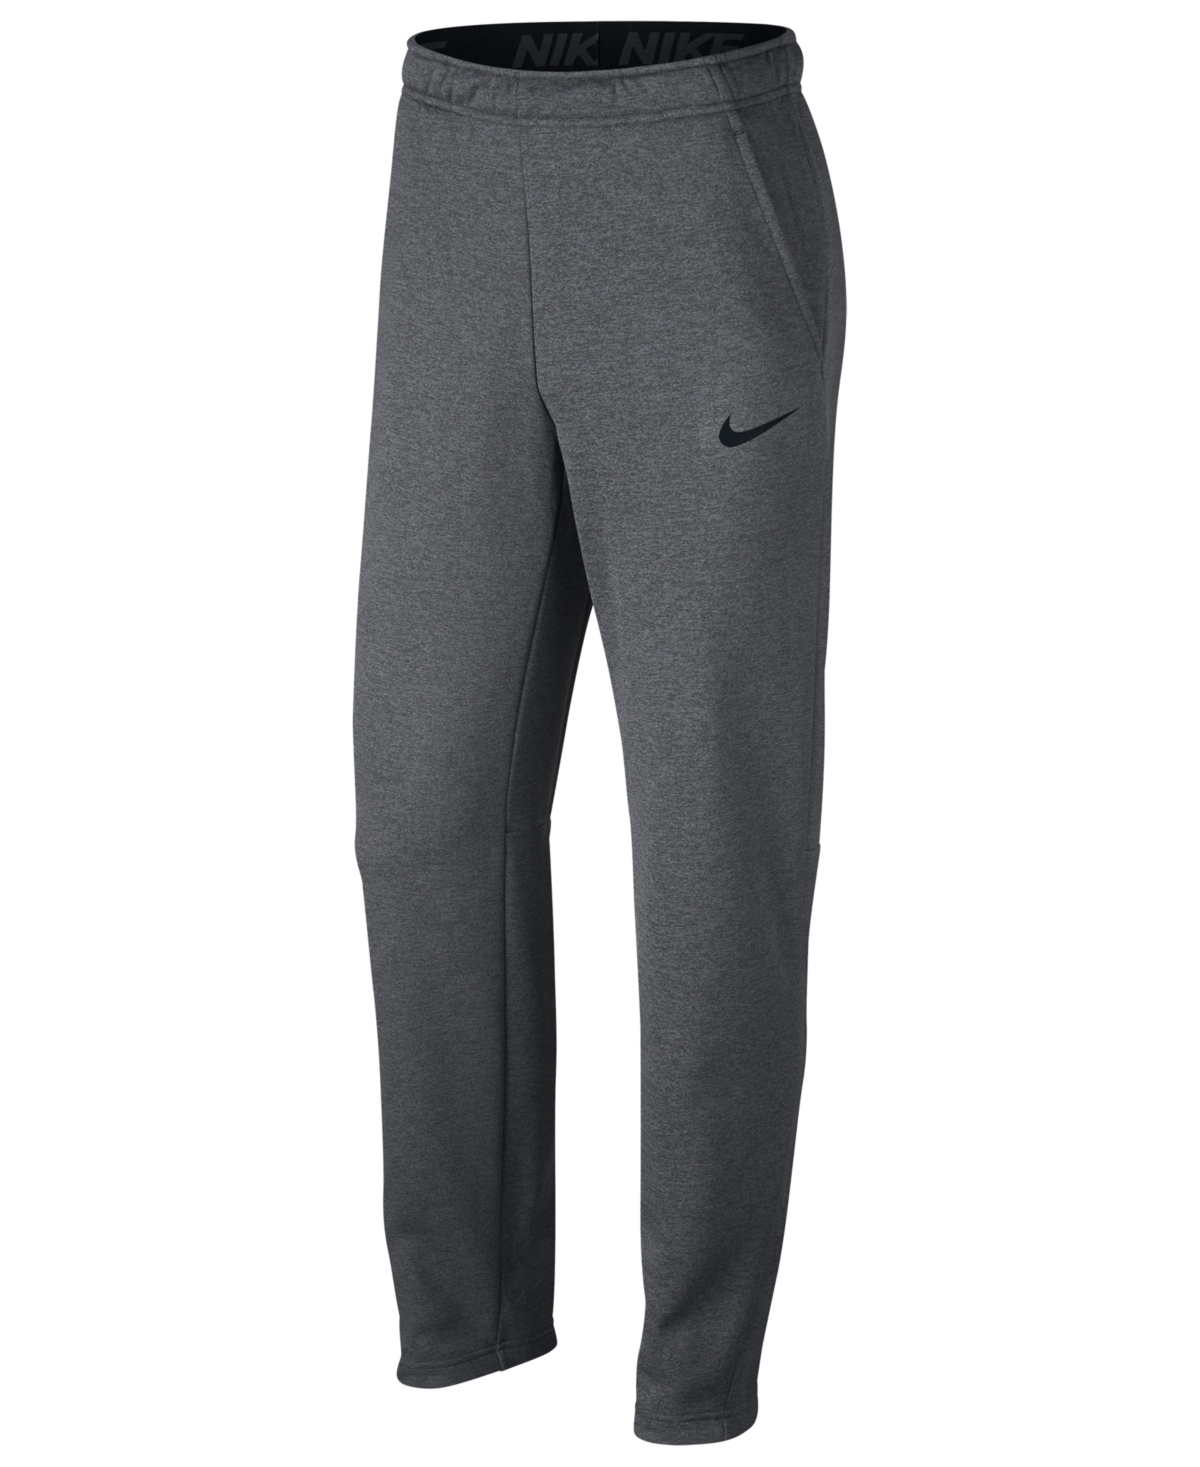 UPC 886668222097 product image for Nike Men's Therma Open Bottom Training Pants | upcitemdb.com